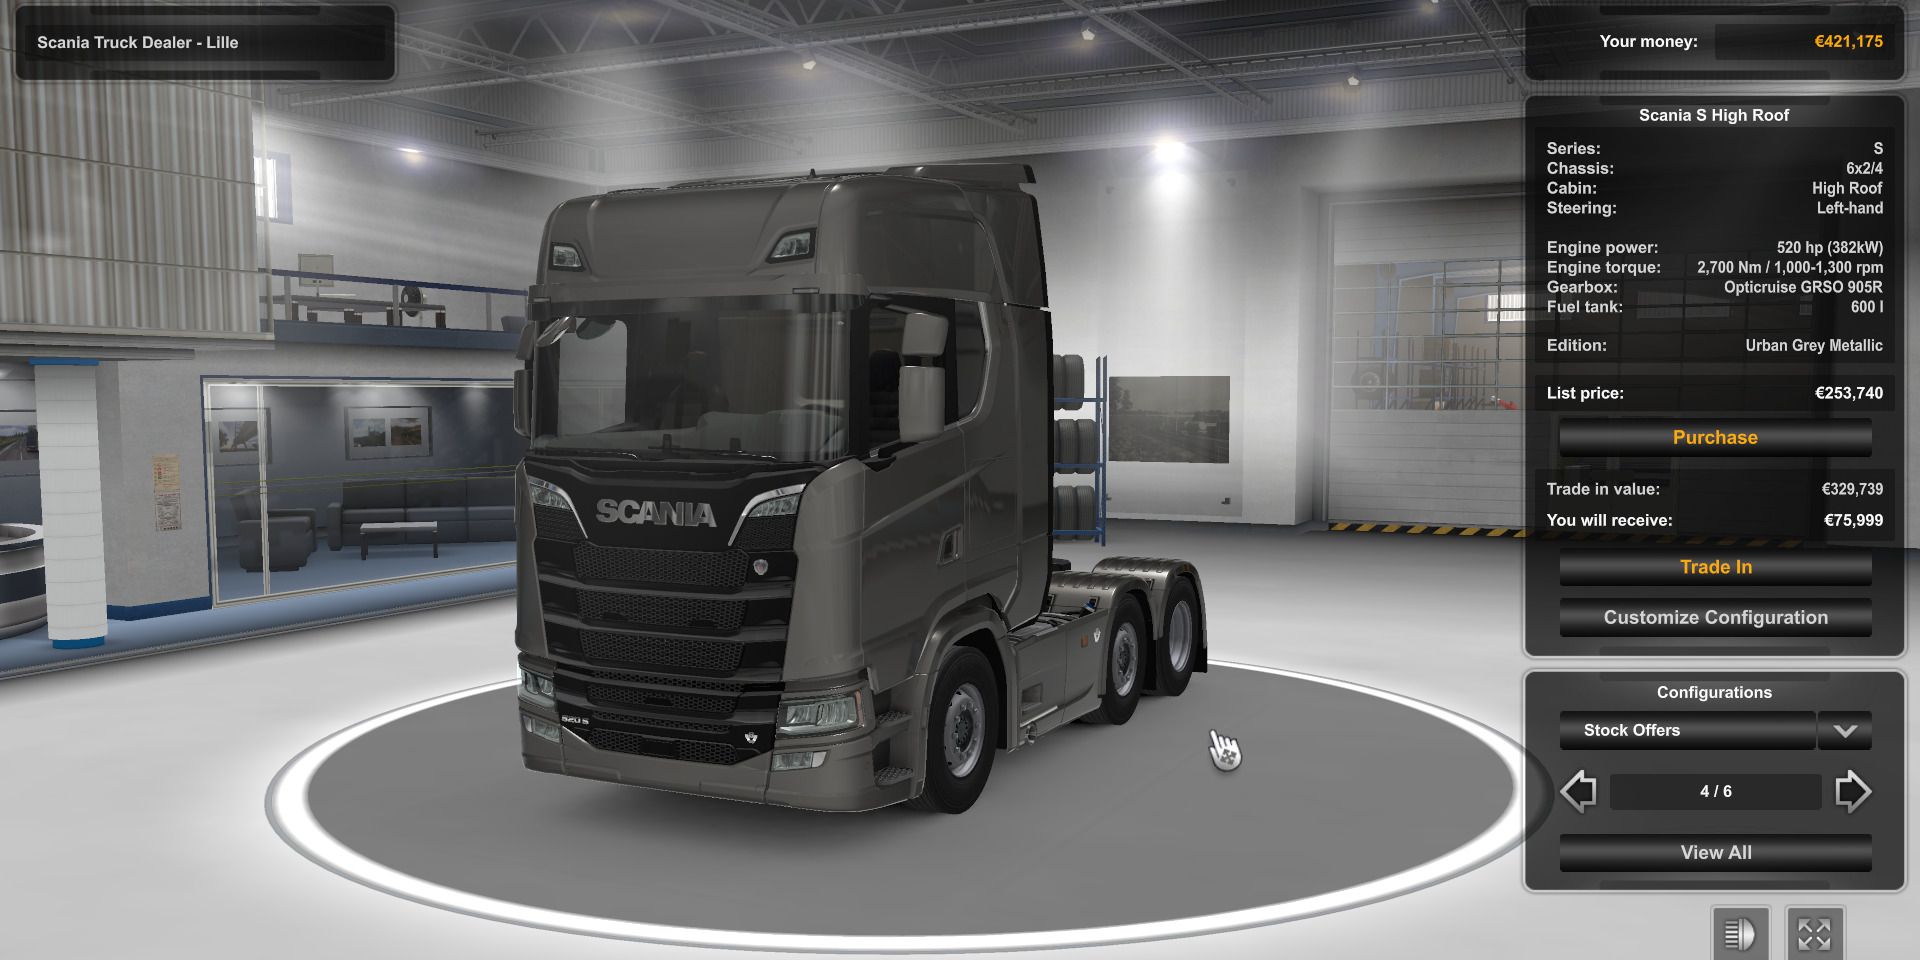 Now Fall guys, Euro truck simulator 2